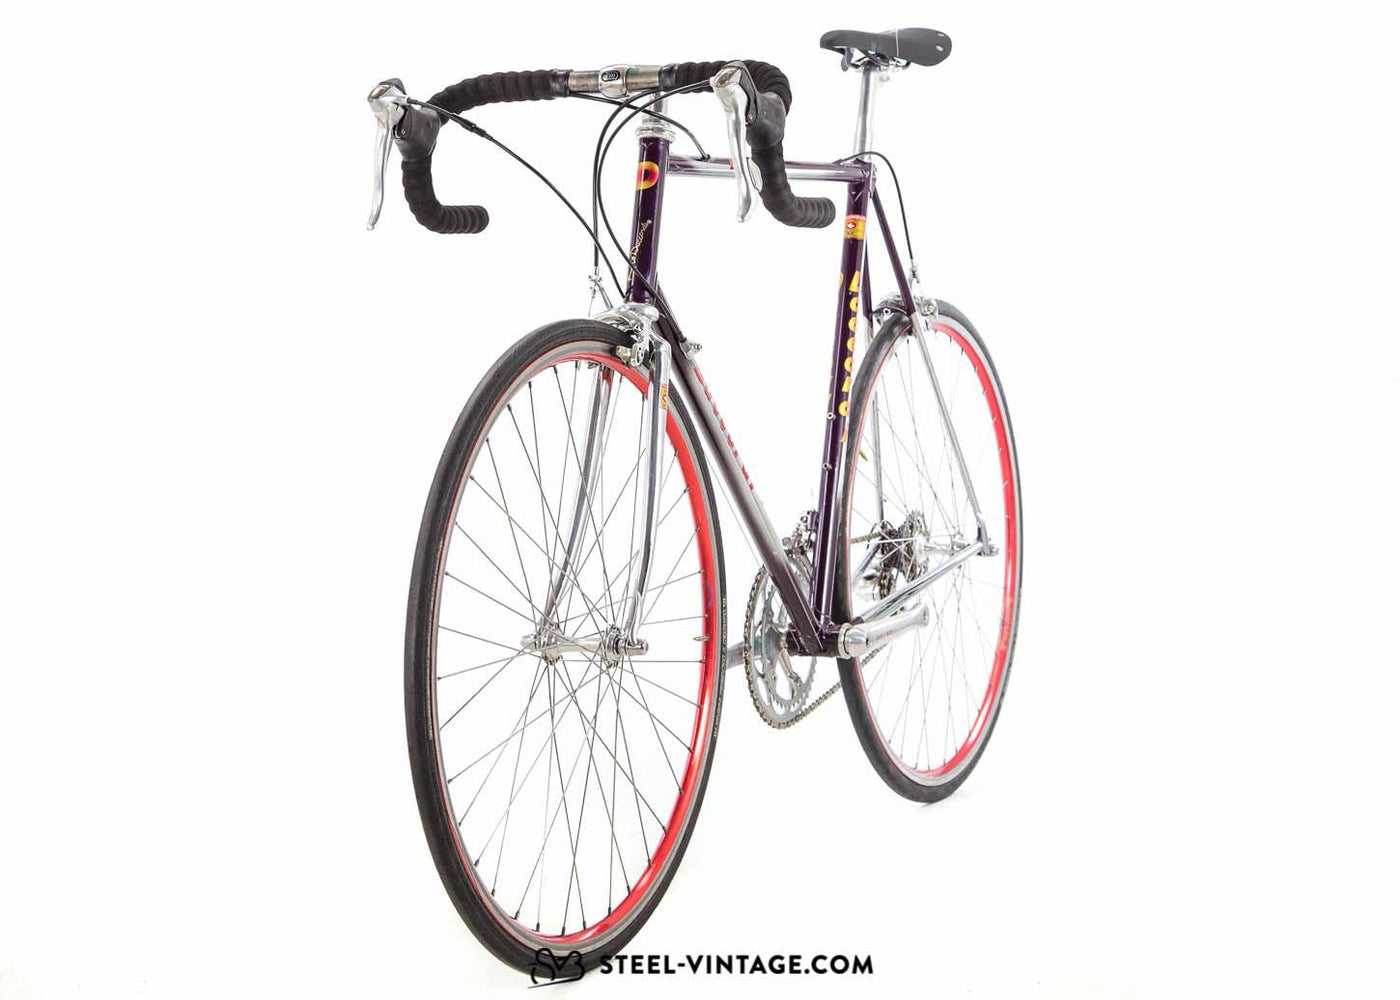 Daccordi Griffe Classic Road Bike 1990s - Steel Vintage Bikes